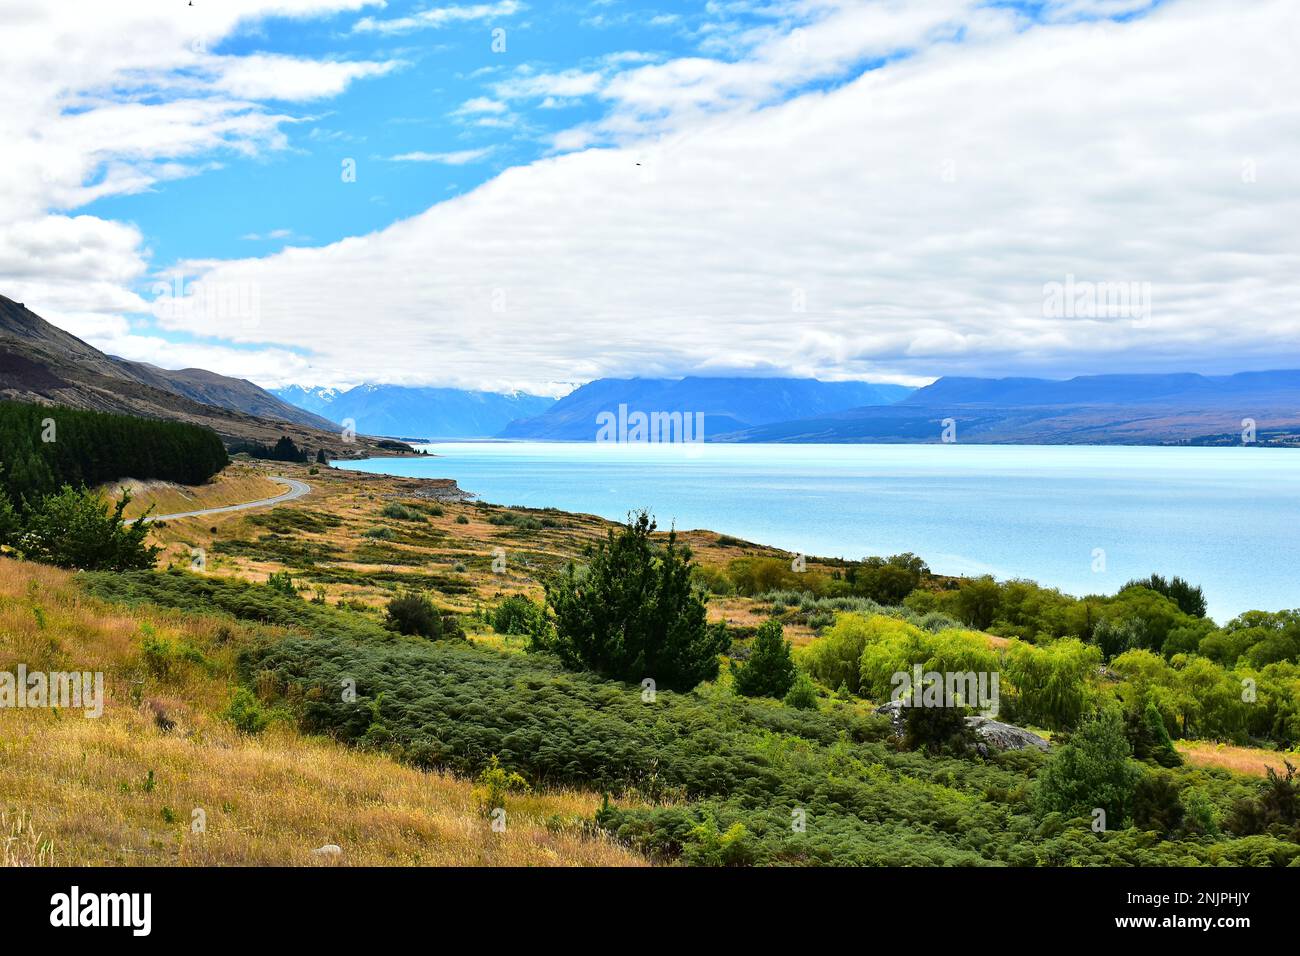 Die Straße führt nach Aoraki mt Cook entlang des pukaki-Sees, Neuseeland. Stockfoto